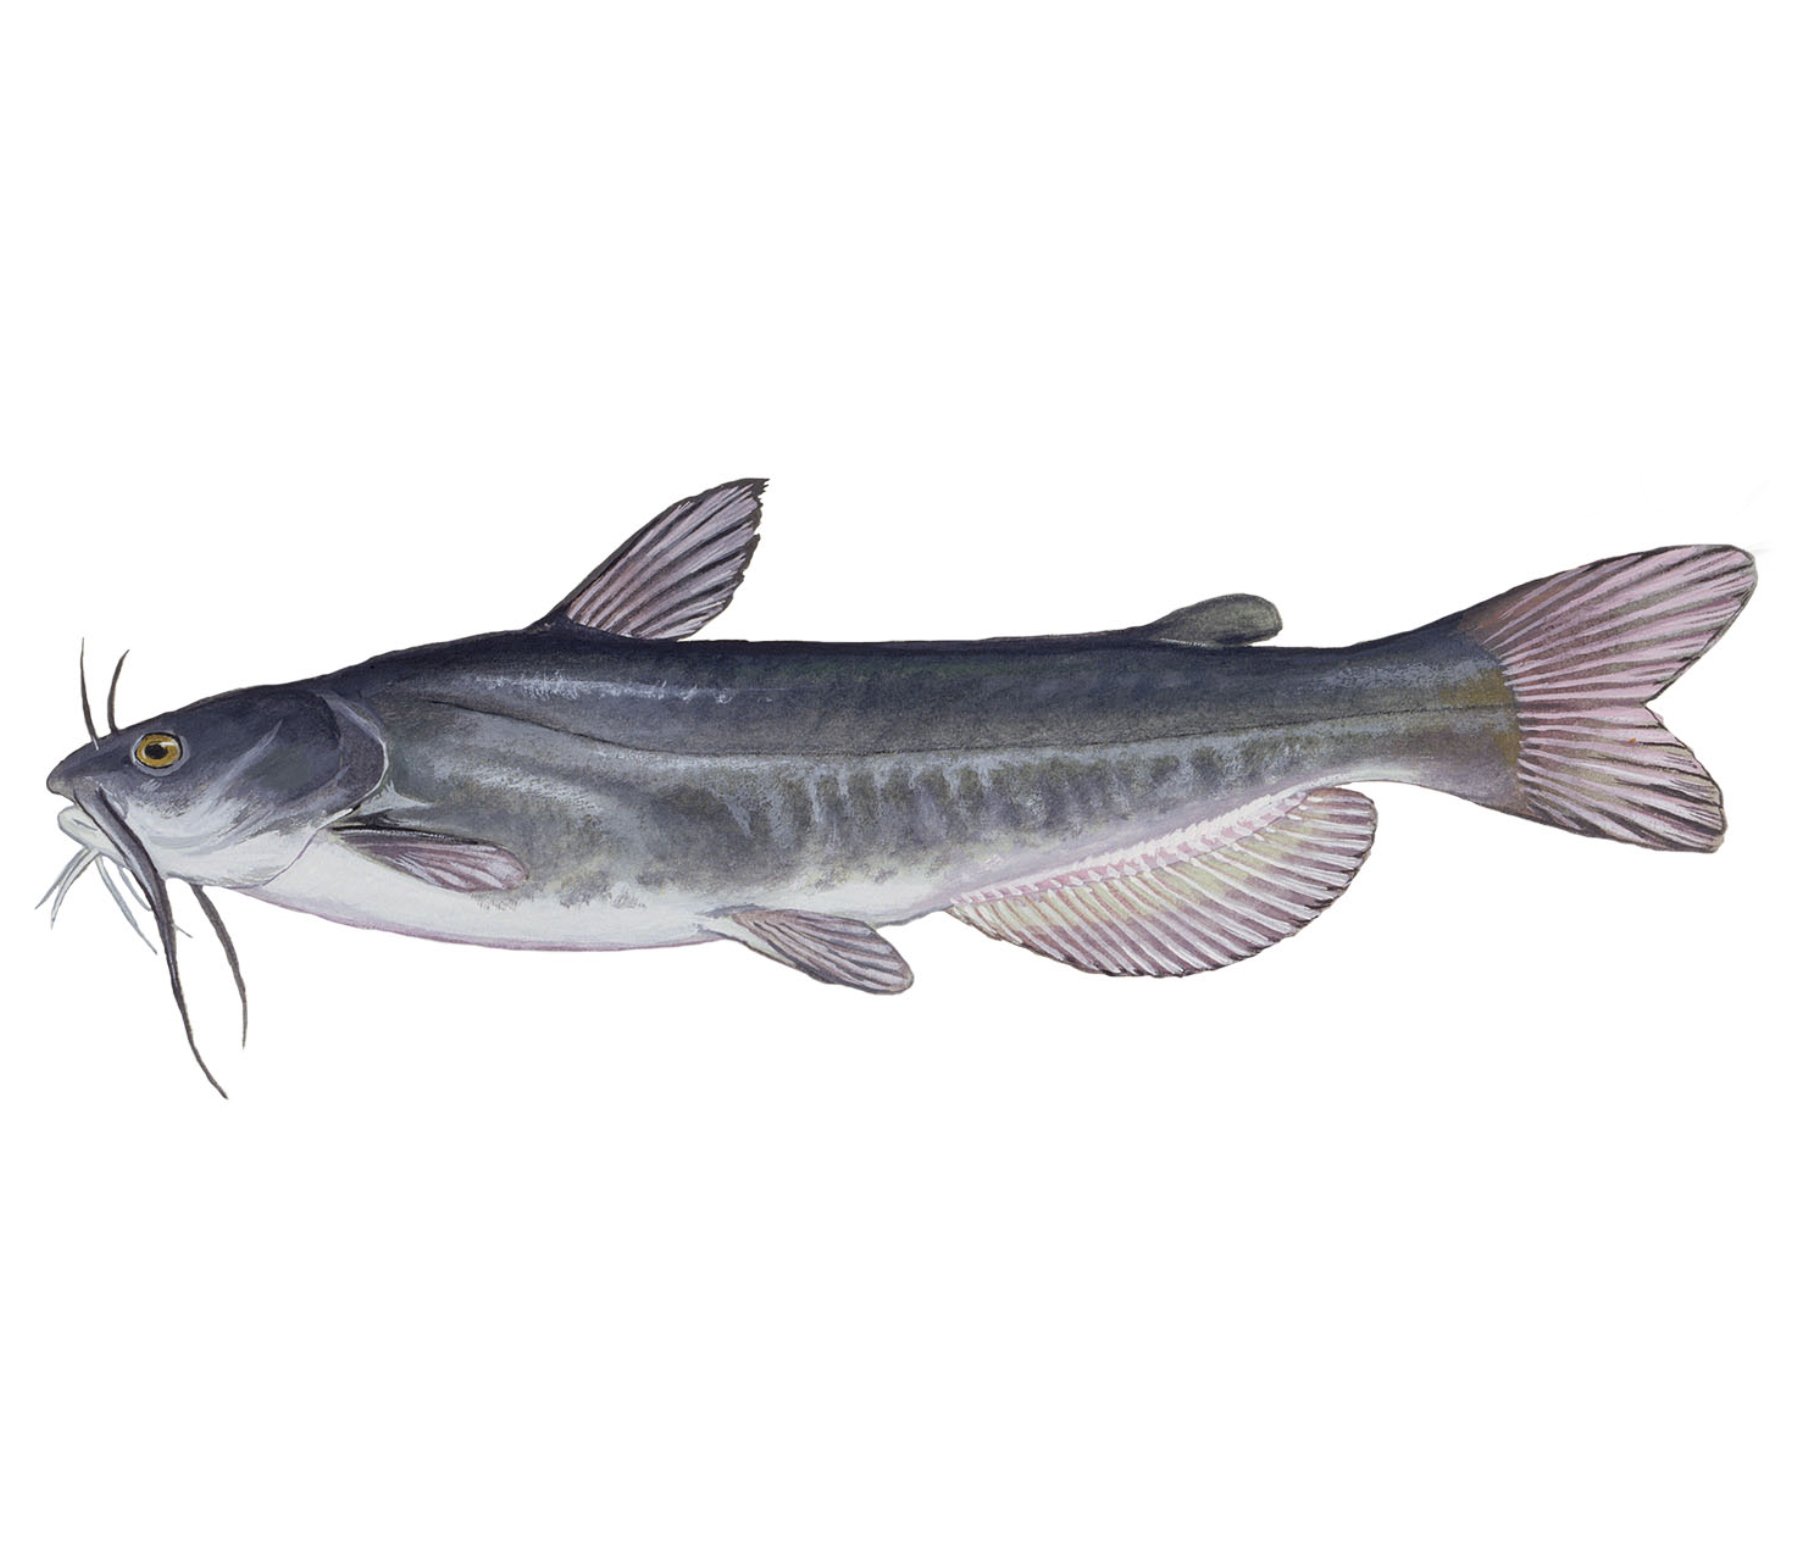 whitecatfish.jpg